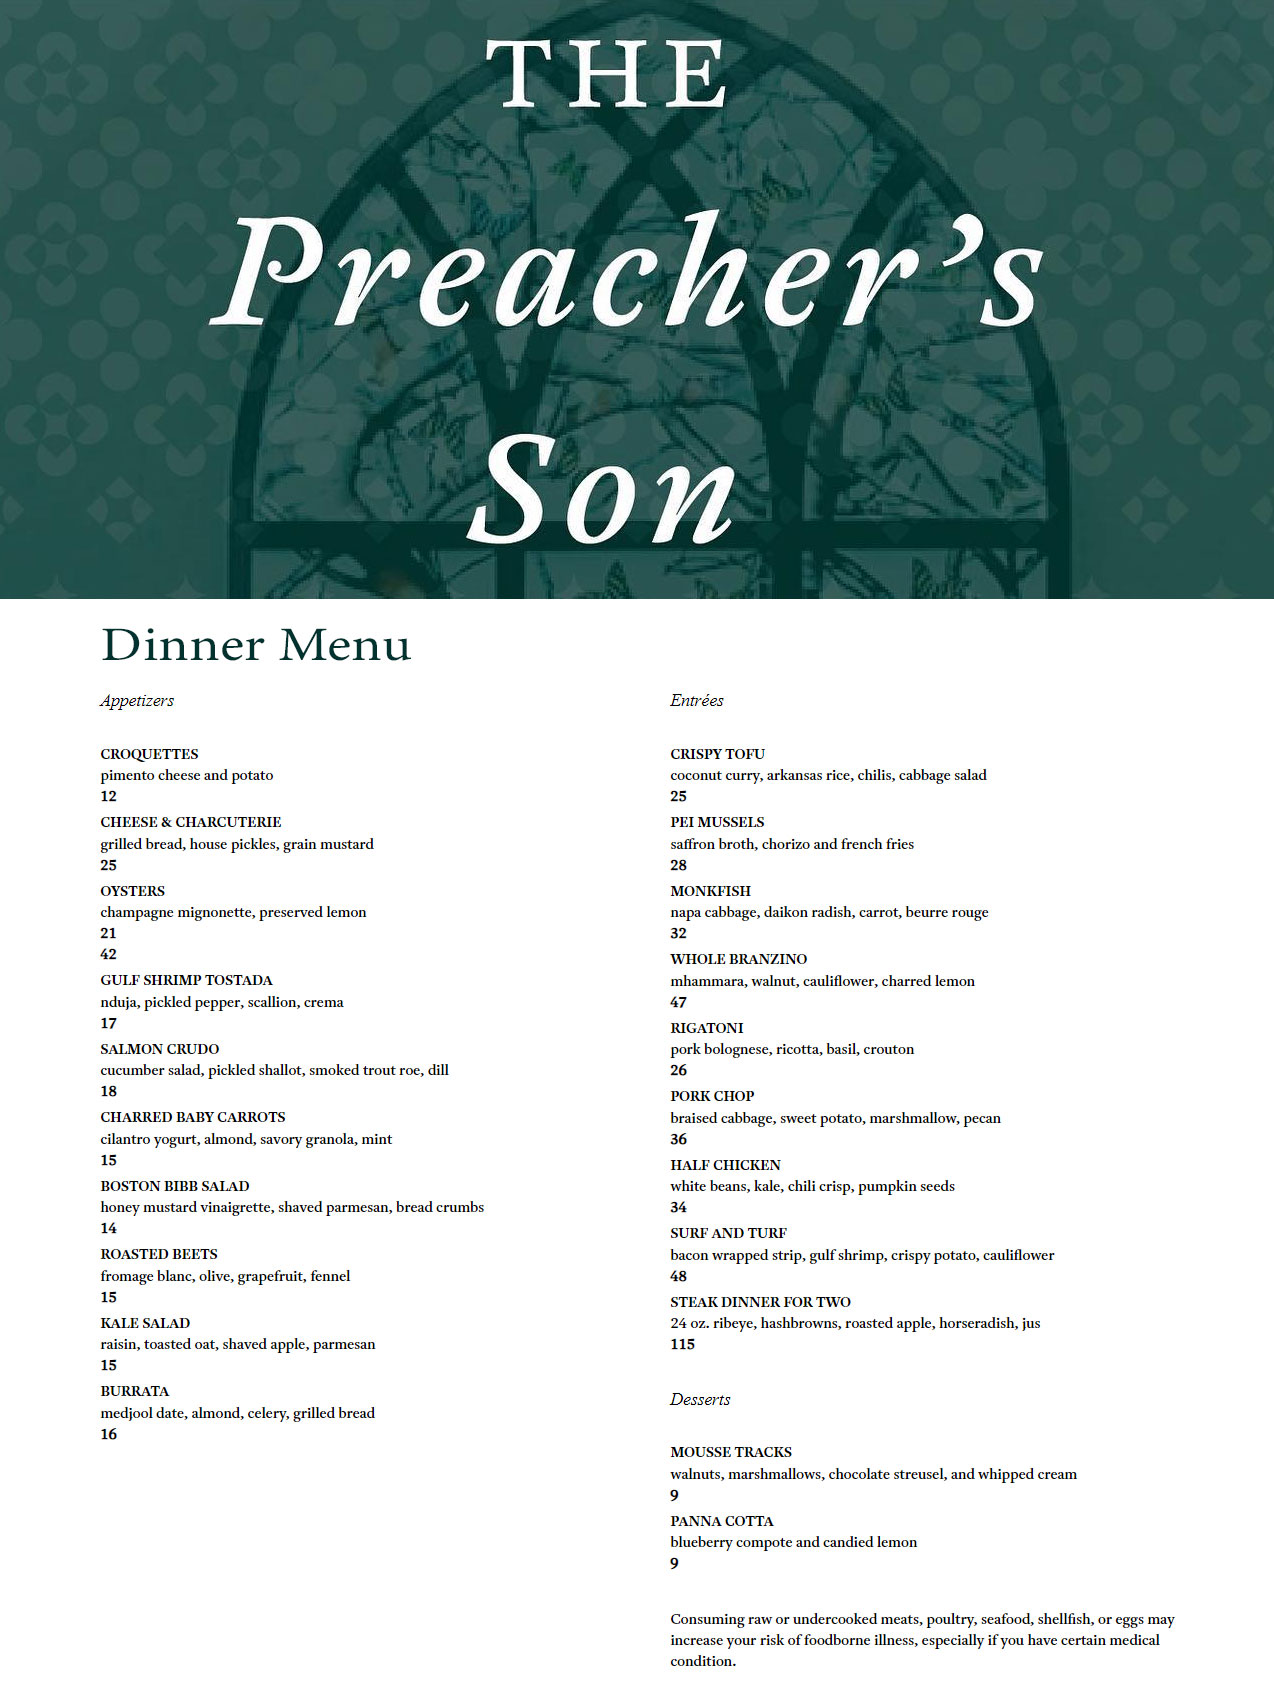 The Preacher's Son - Dinner Menu